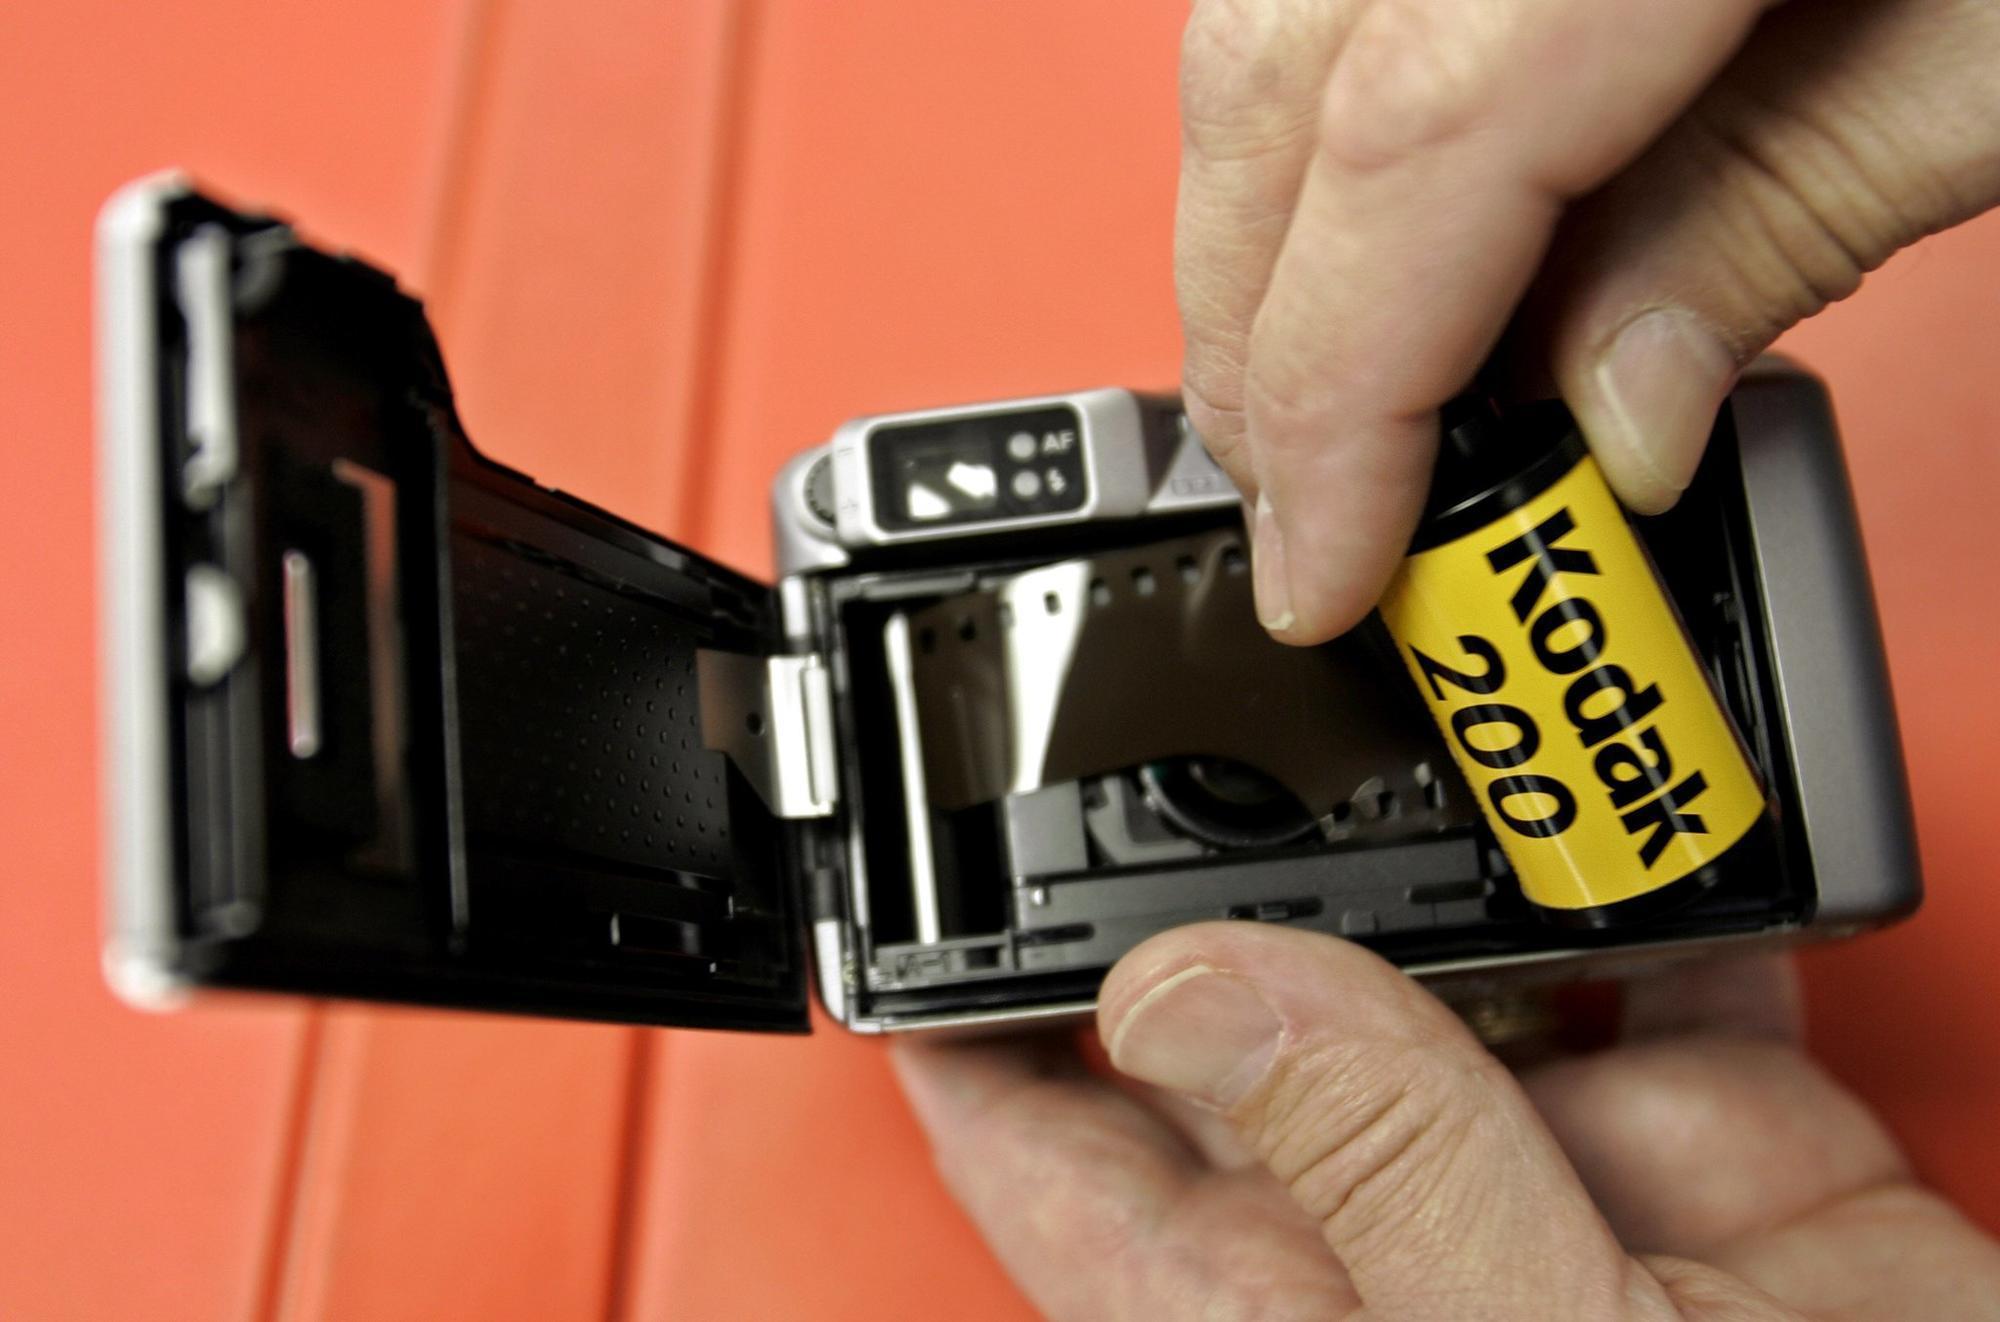 Kodak creating KodakCoin, its own cryptocurrency system - Chicago ...